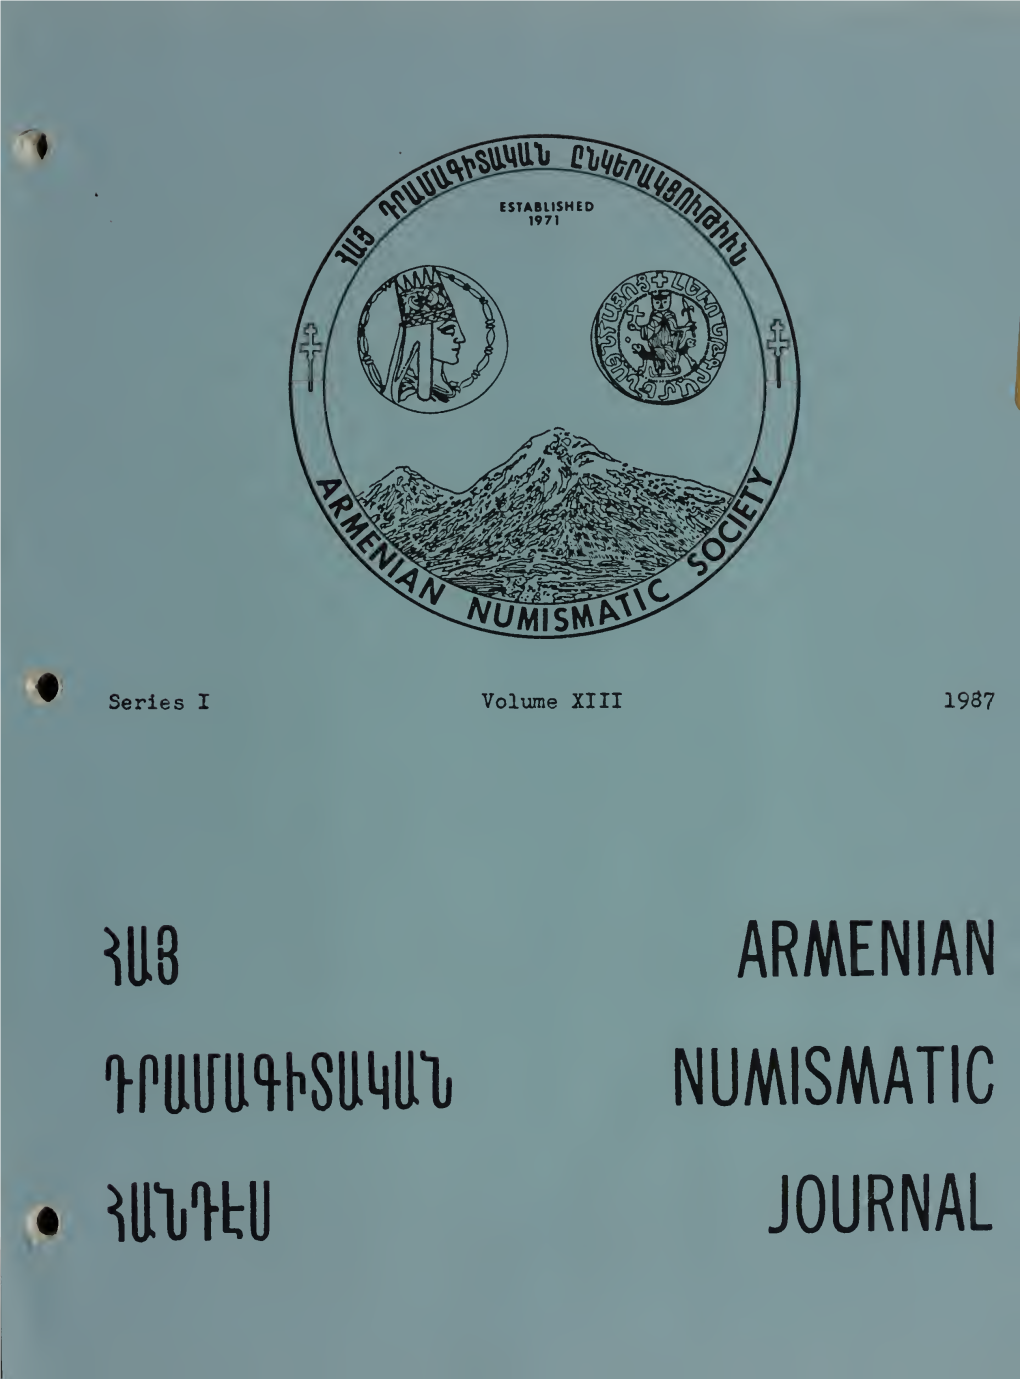 ARMENIAN Wluniwfb NUMISMATIC I Wm JOURNAL